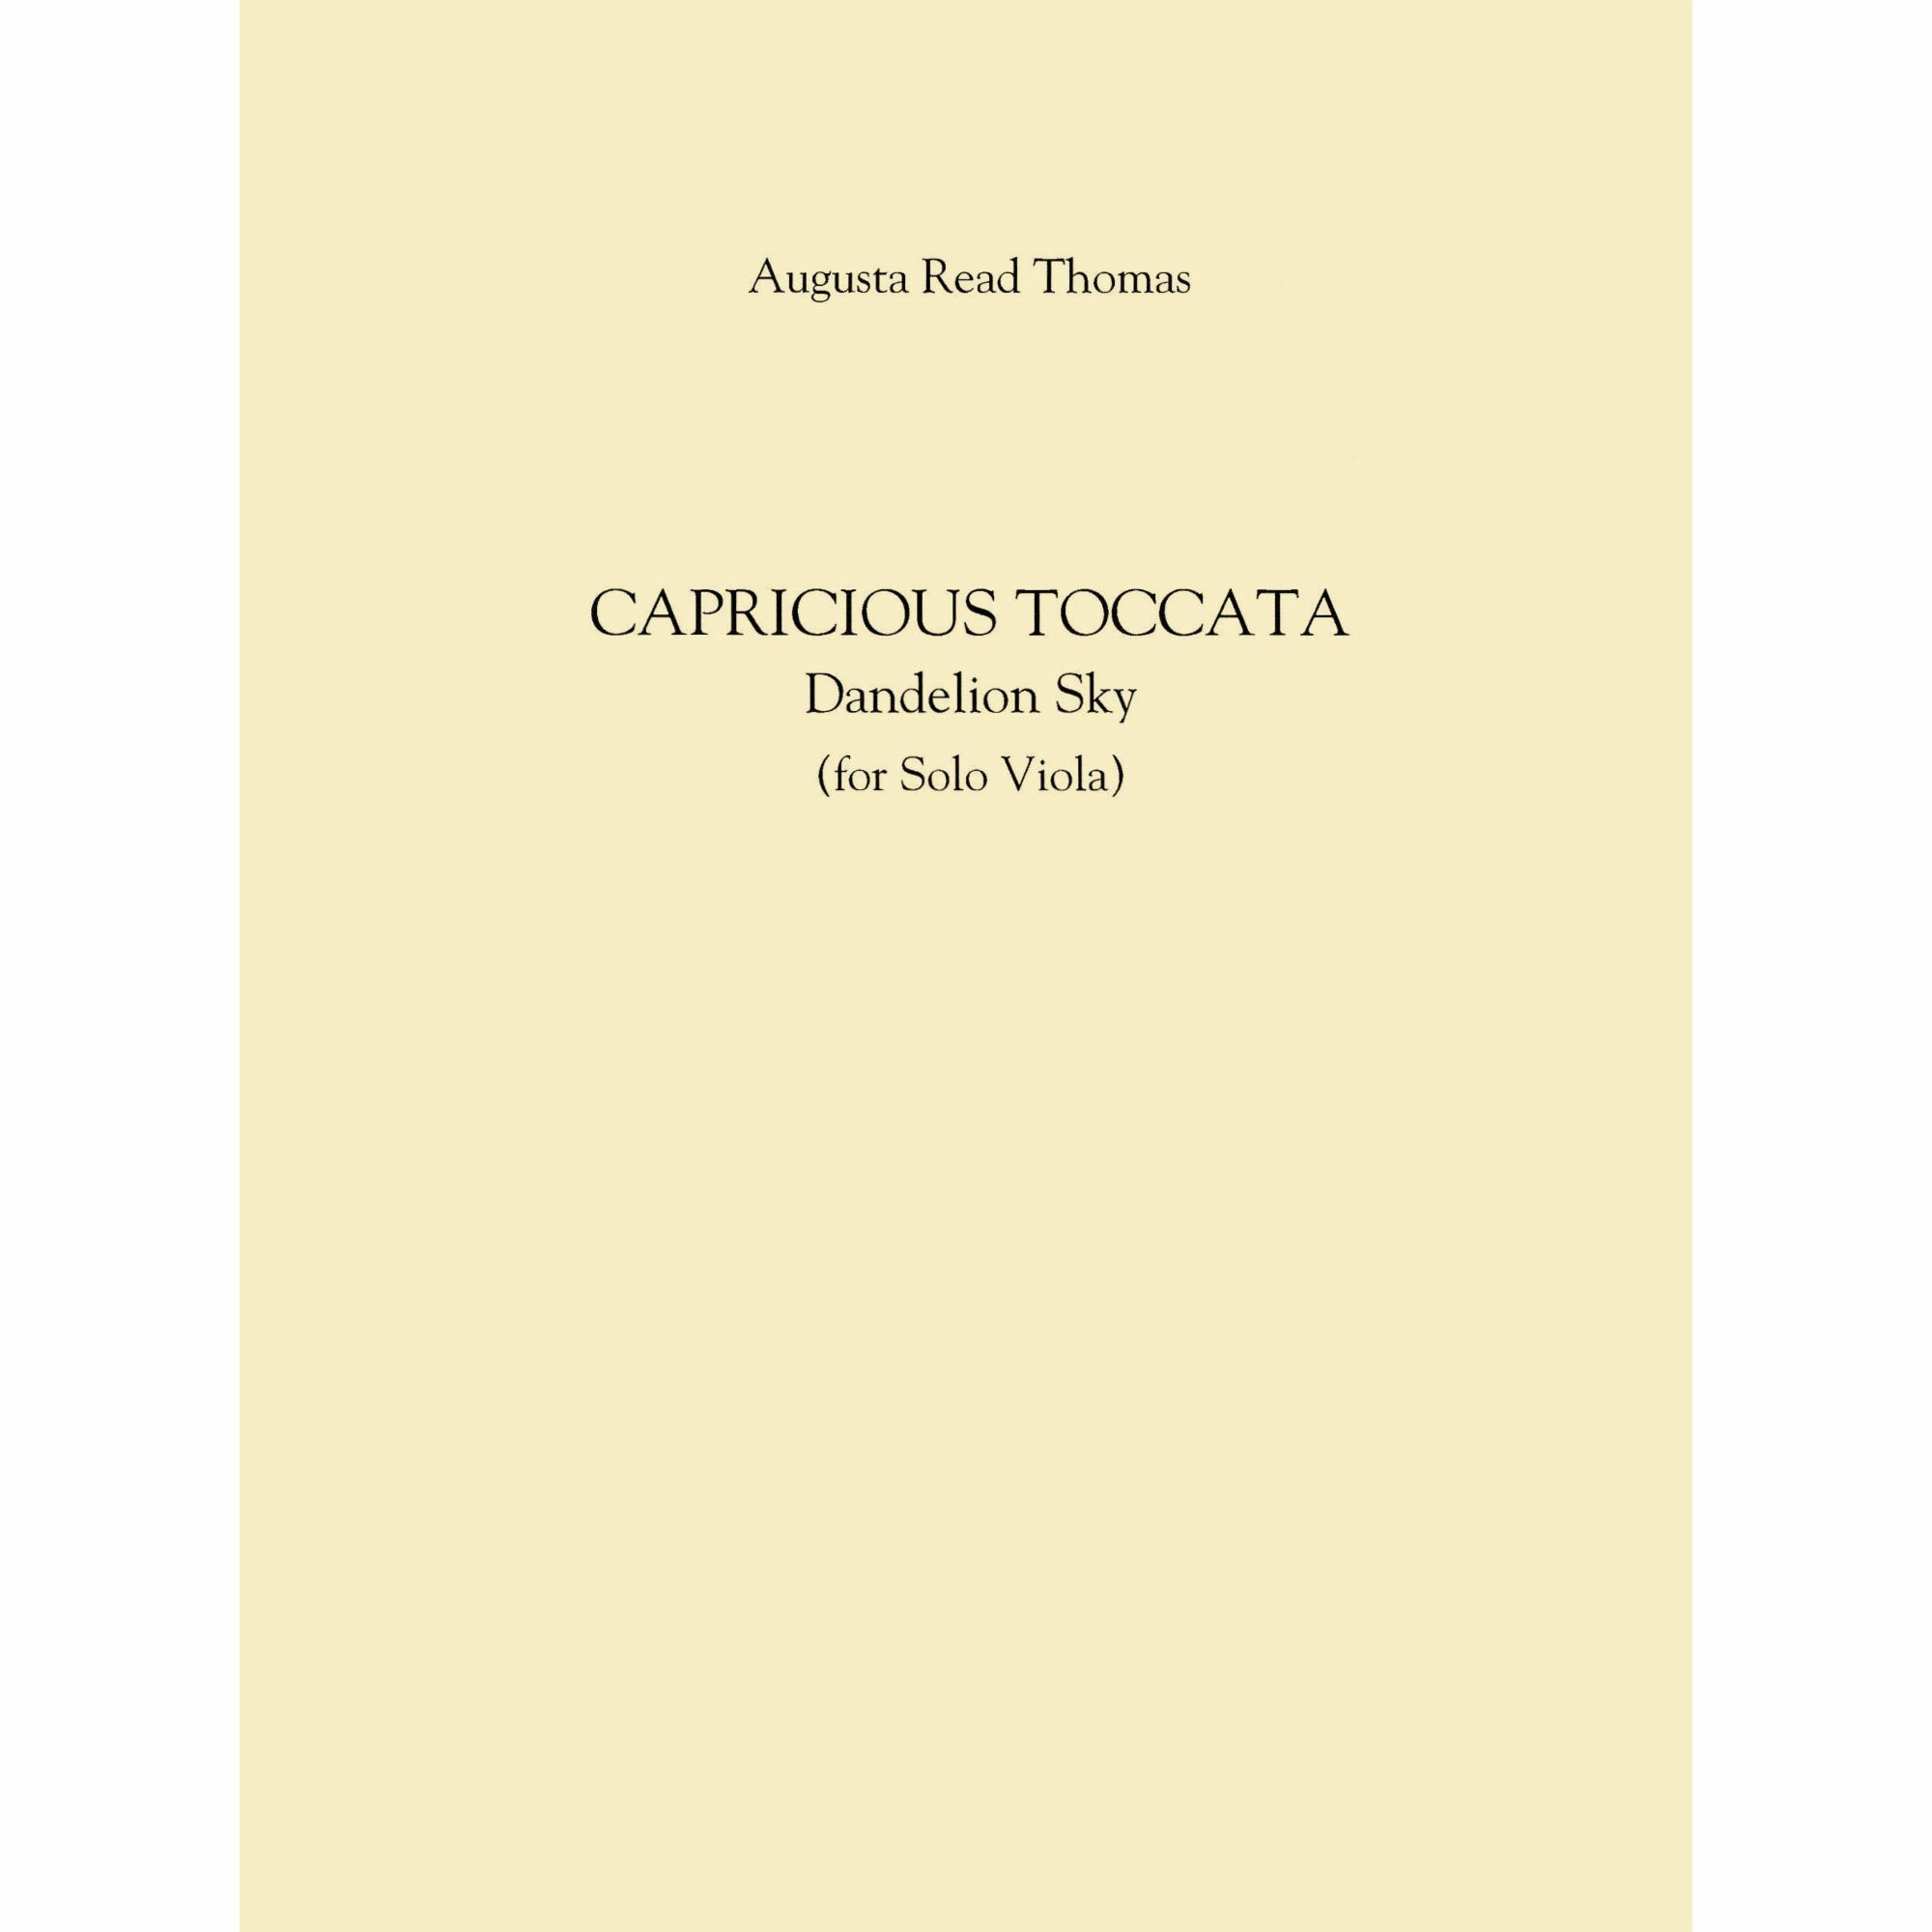 Thomas -- Capricious Toccata (Dandelion Sky) for Solo Viola